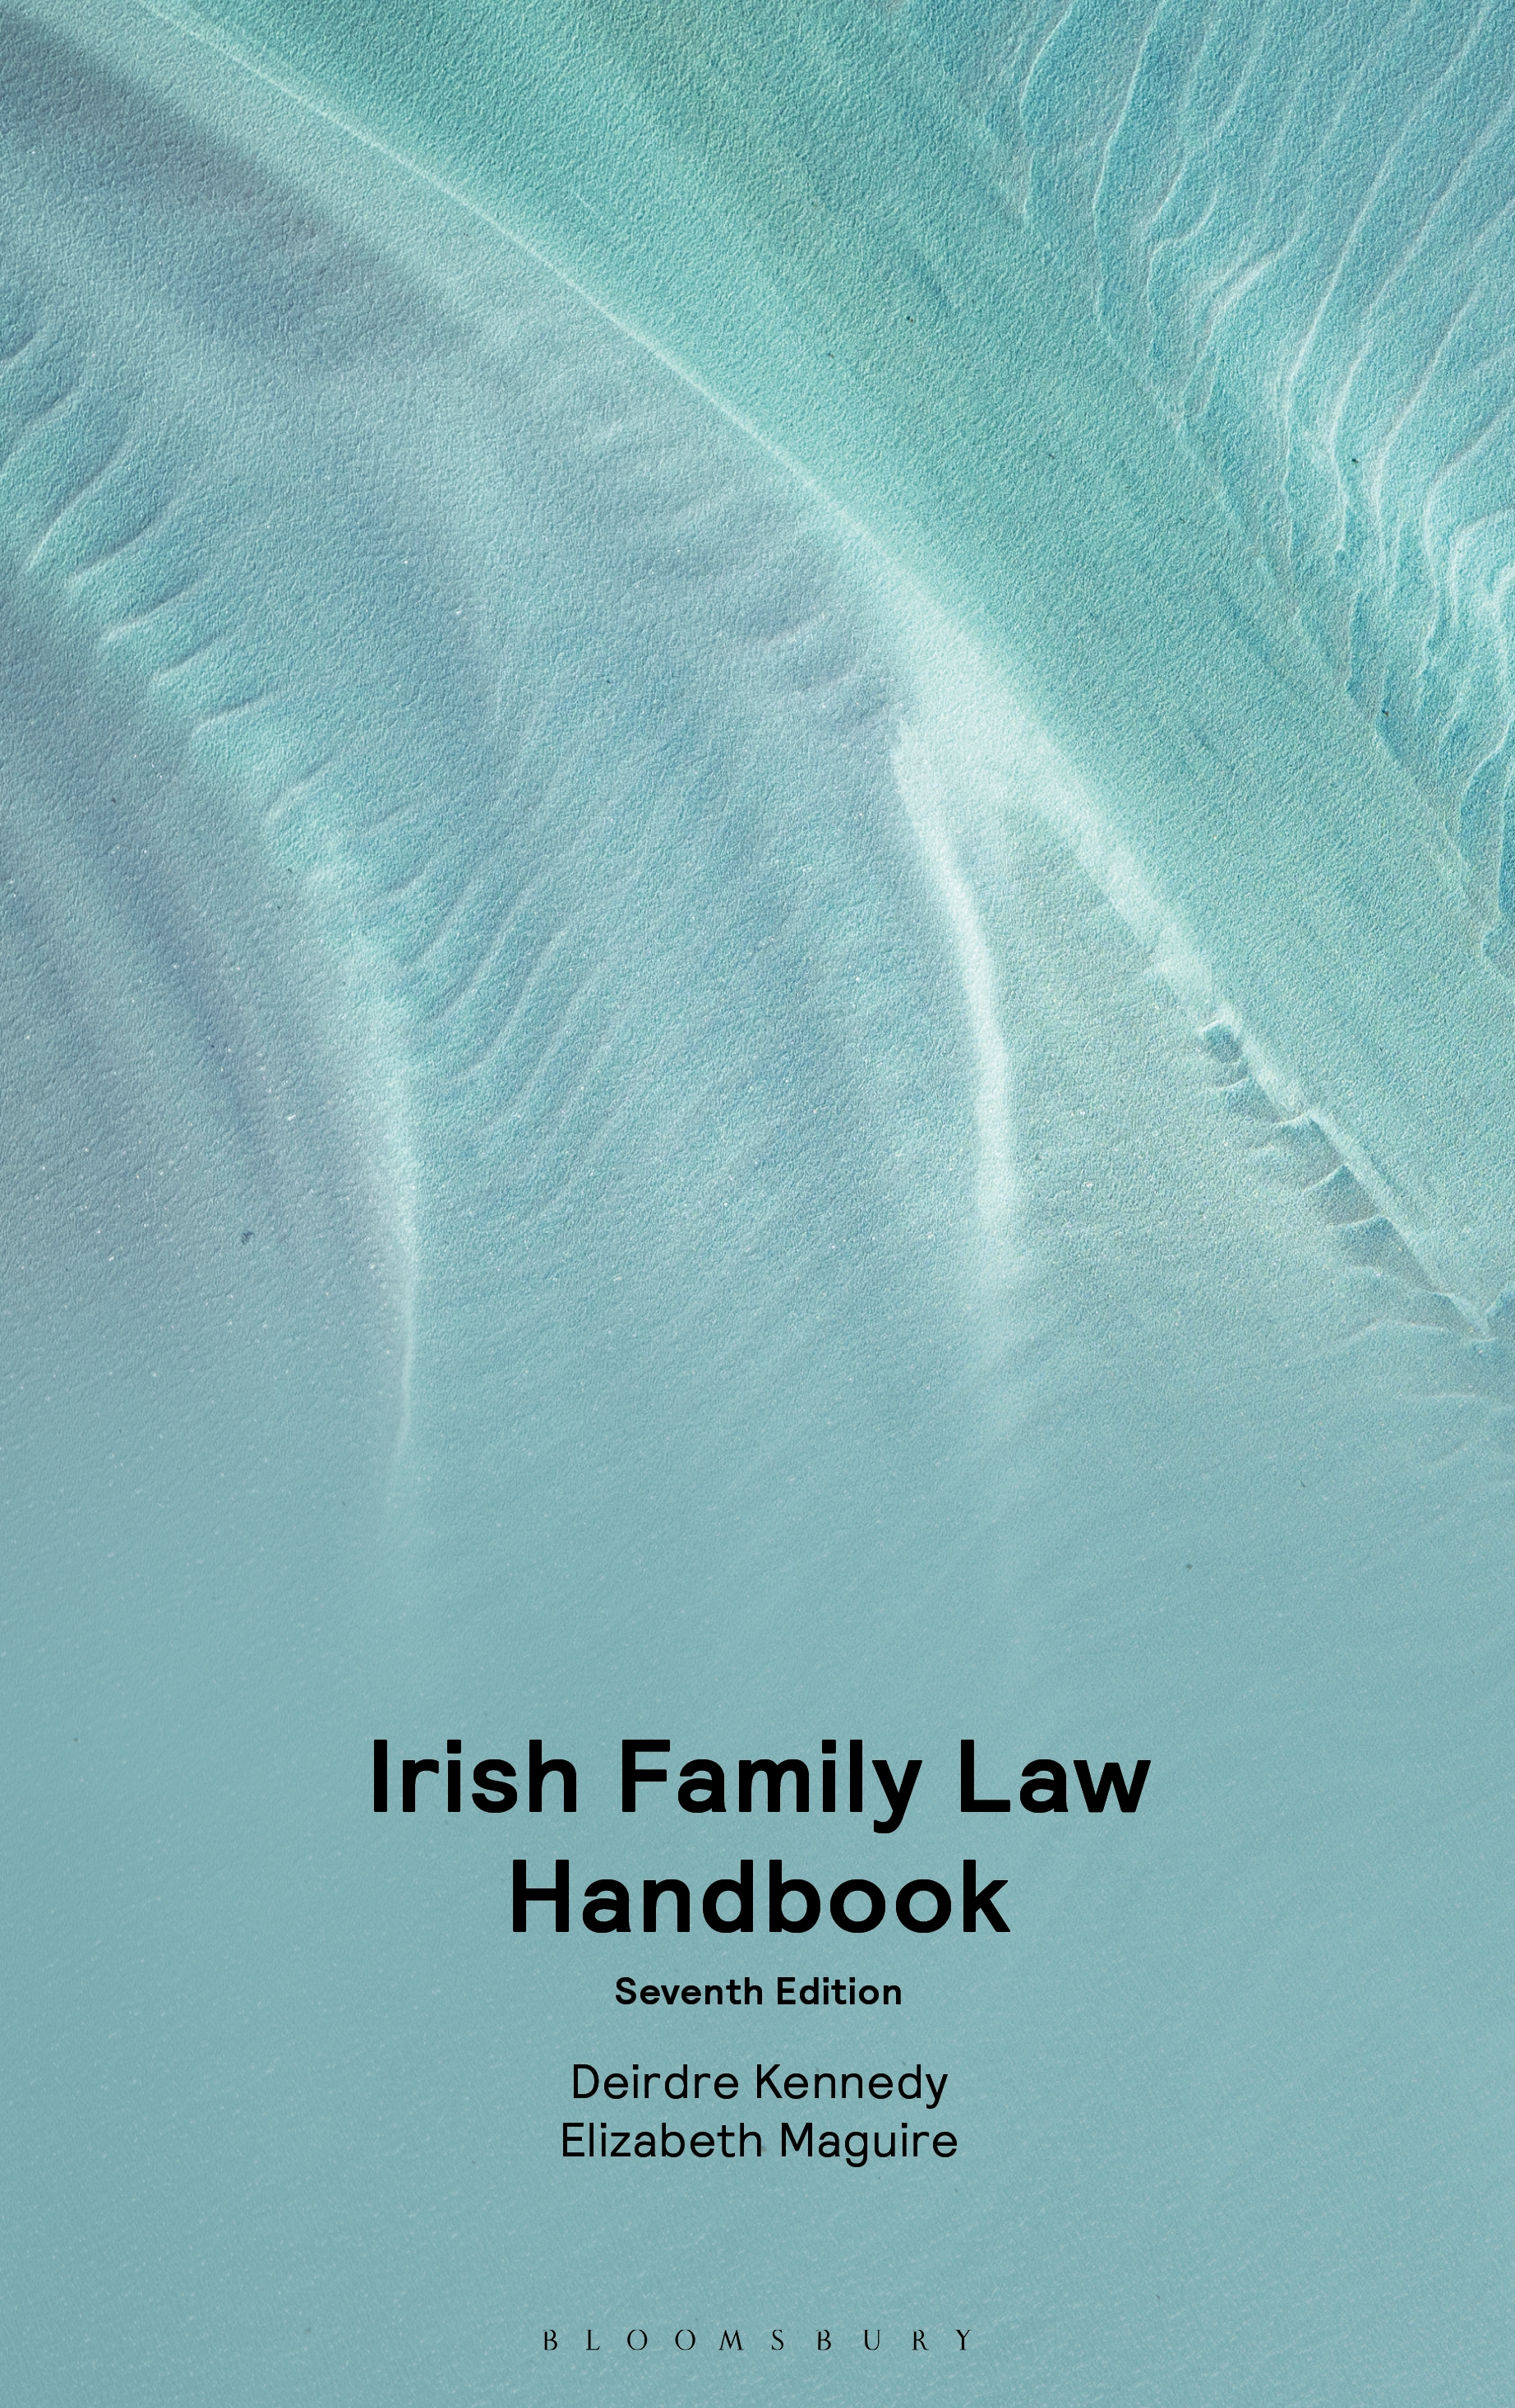 Irish Family Law Handbook book jacket